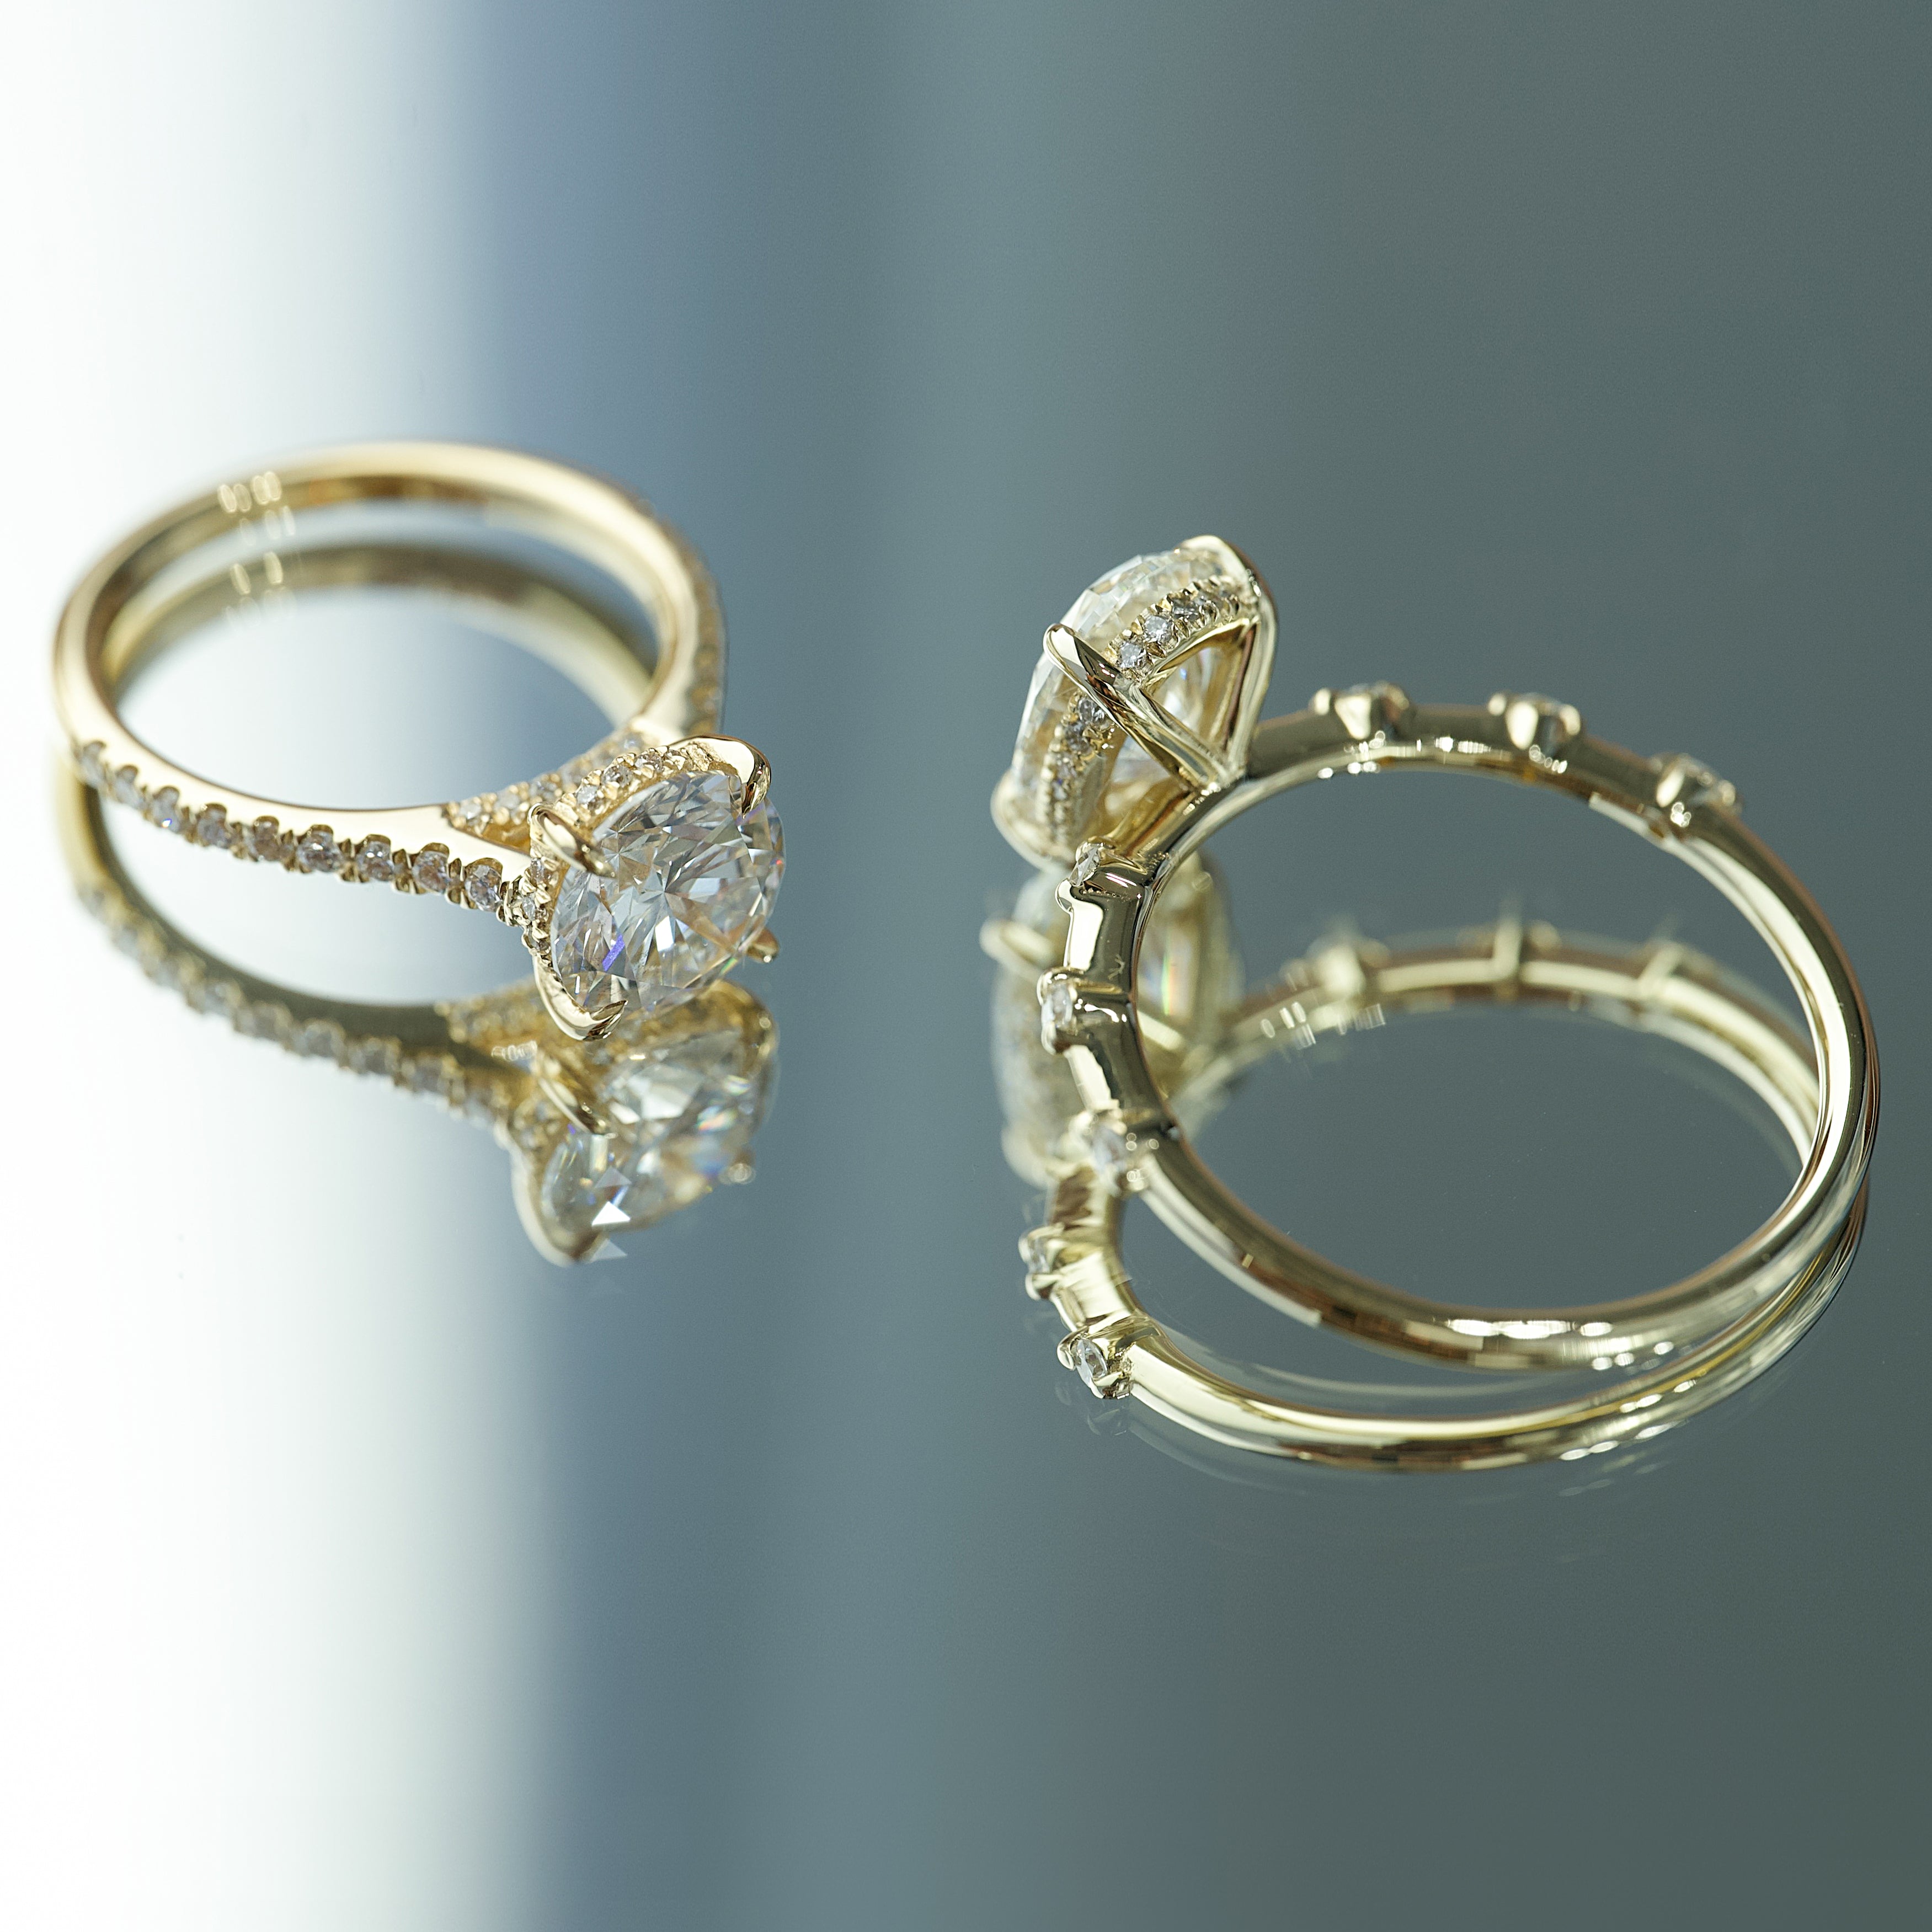 Buy Latest Impon Navaratna Gold Ring Design Gold Plated 9 Stone Ring for Men